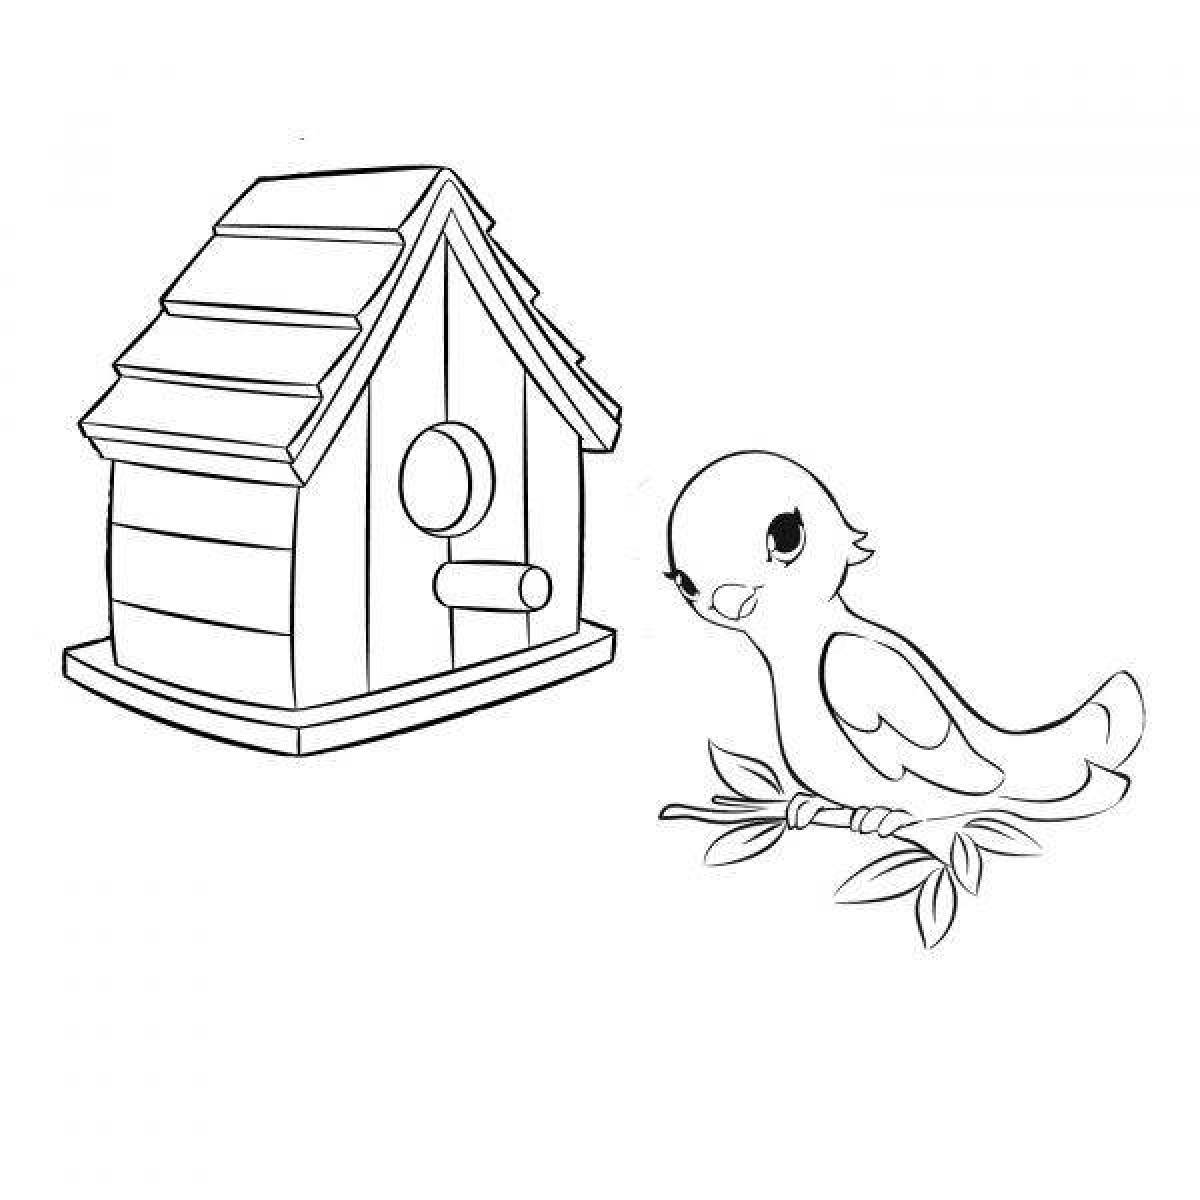 Wonderful birdhouse coloring book